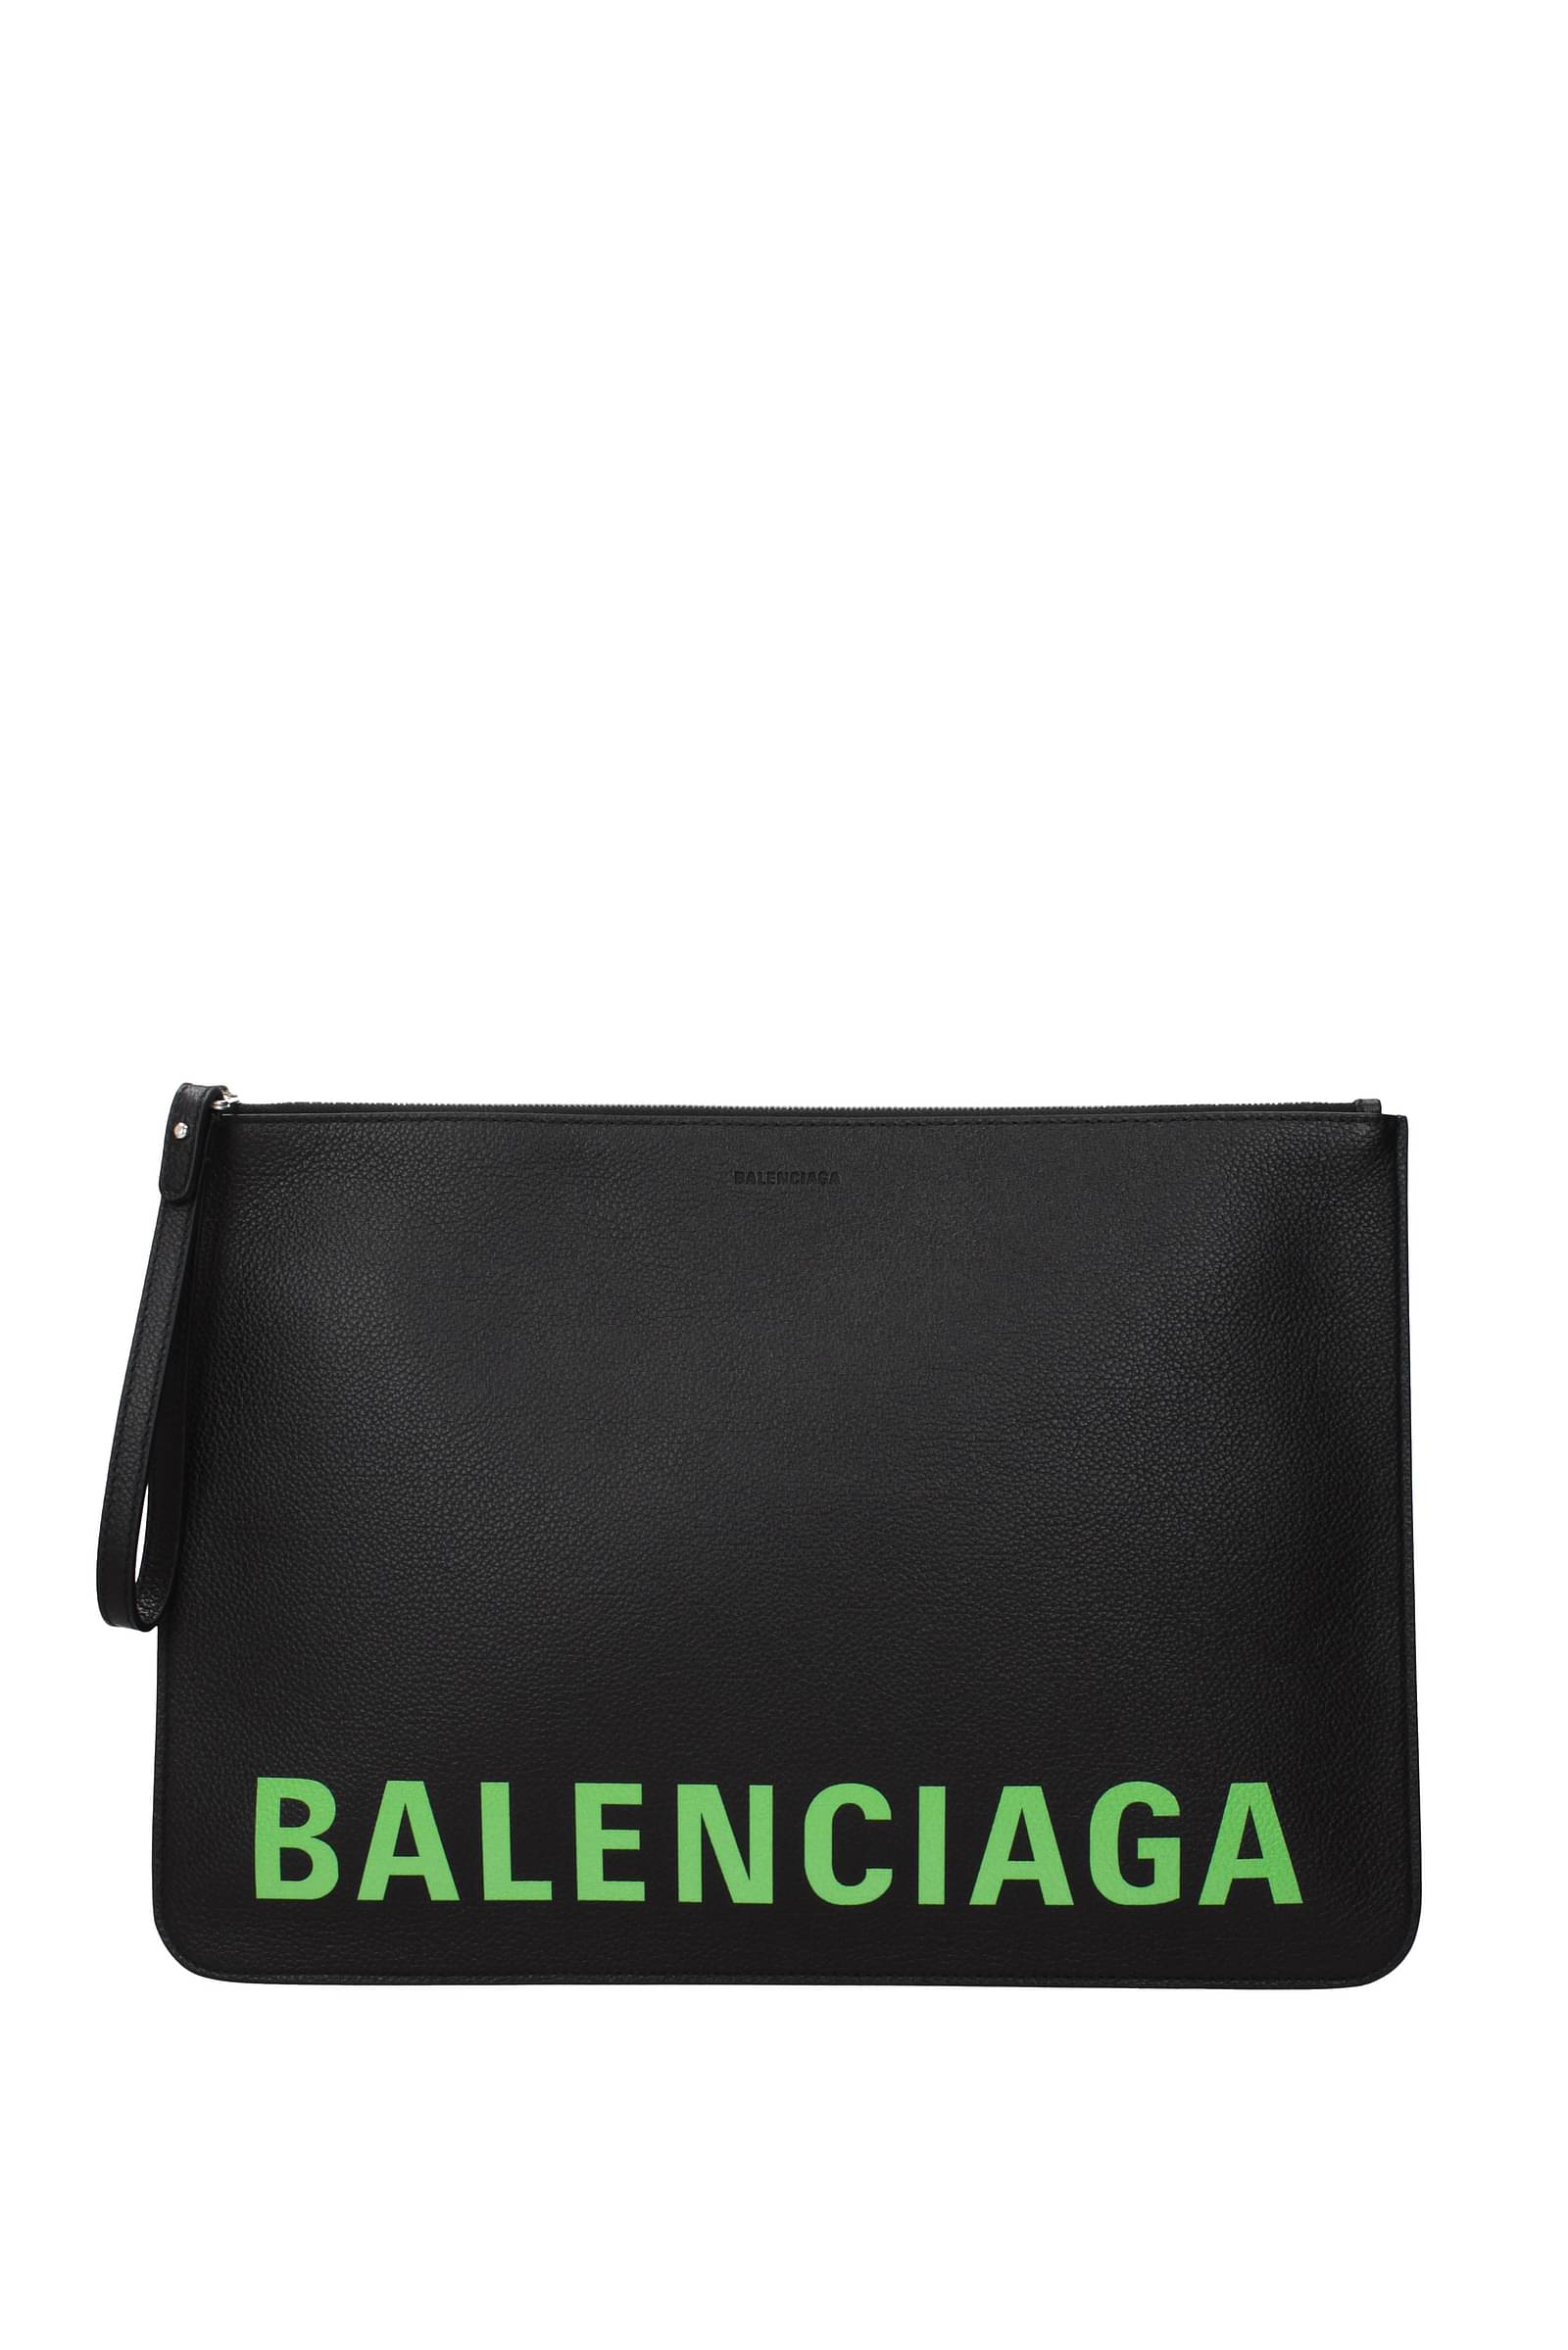 BALENCIAGA  Hourglass Xs Bag  Women  Crossbody Bags  Flannels